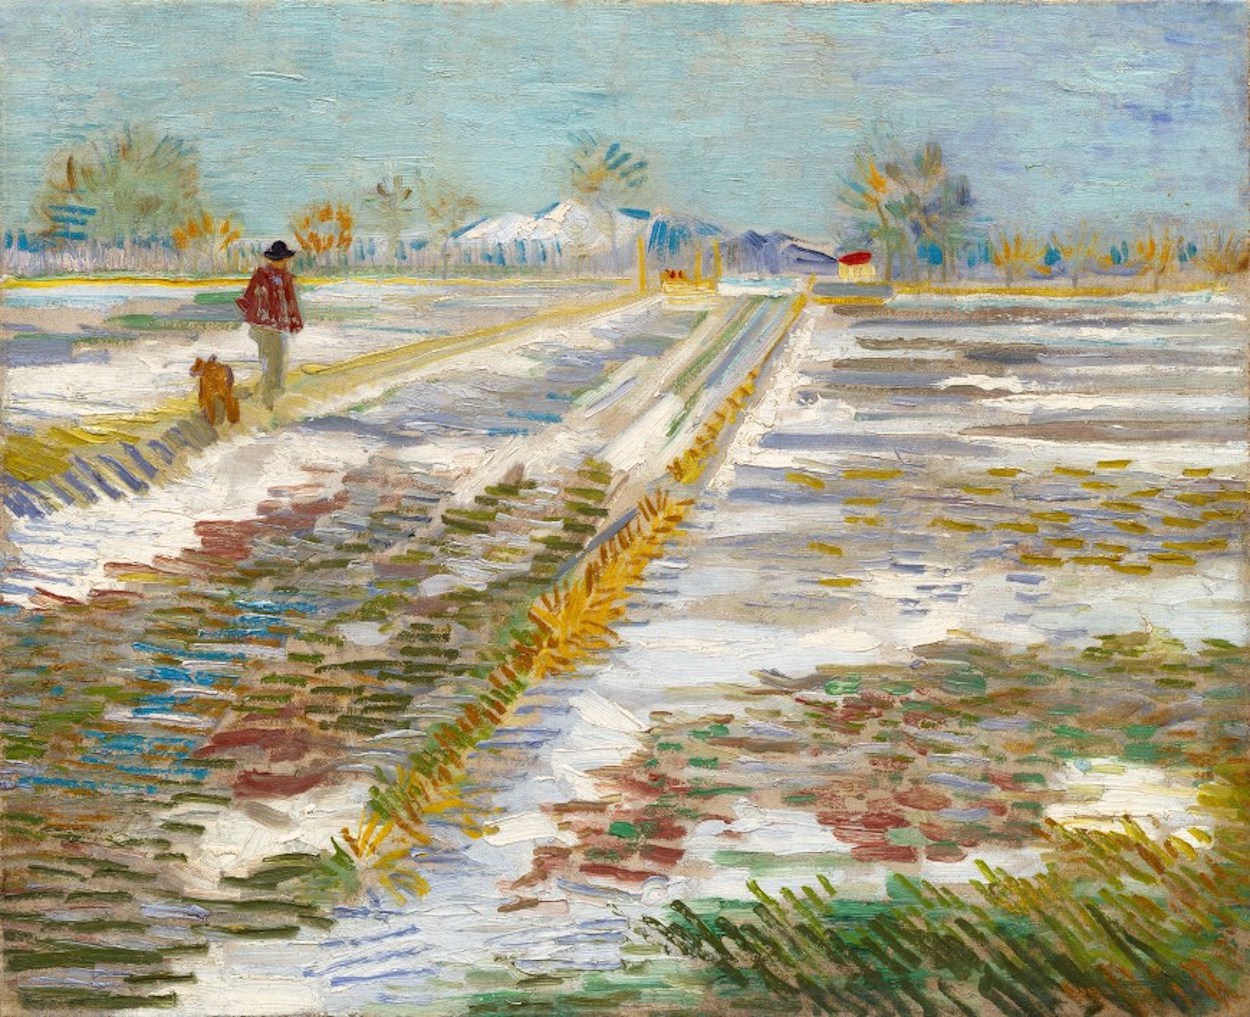 雪景 by Vincent van Gogh - 1888 - 38 x 46 cm 